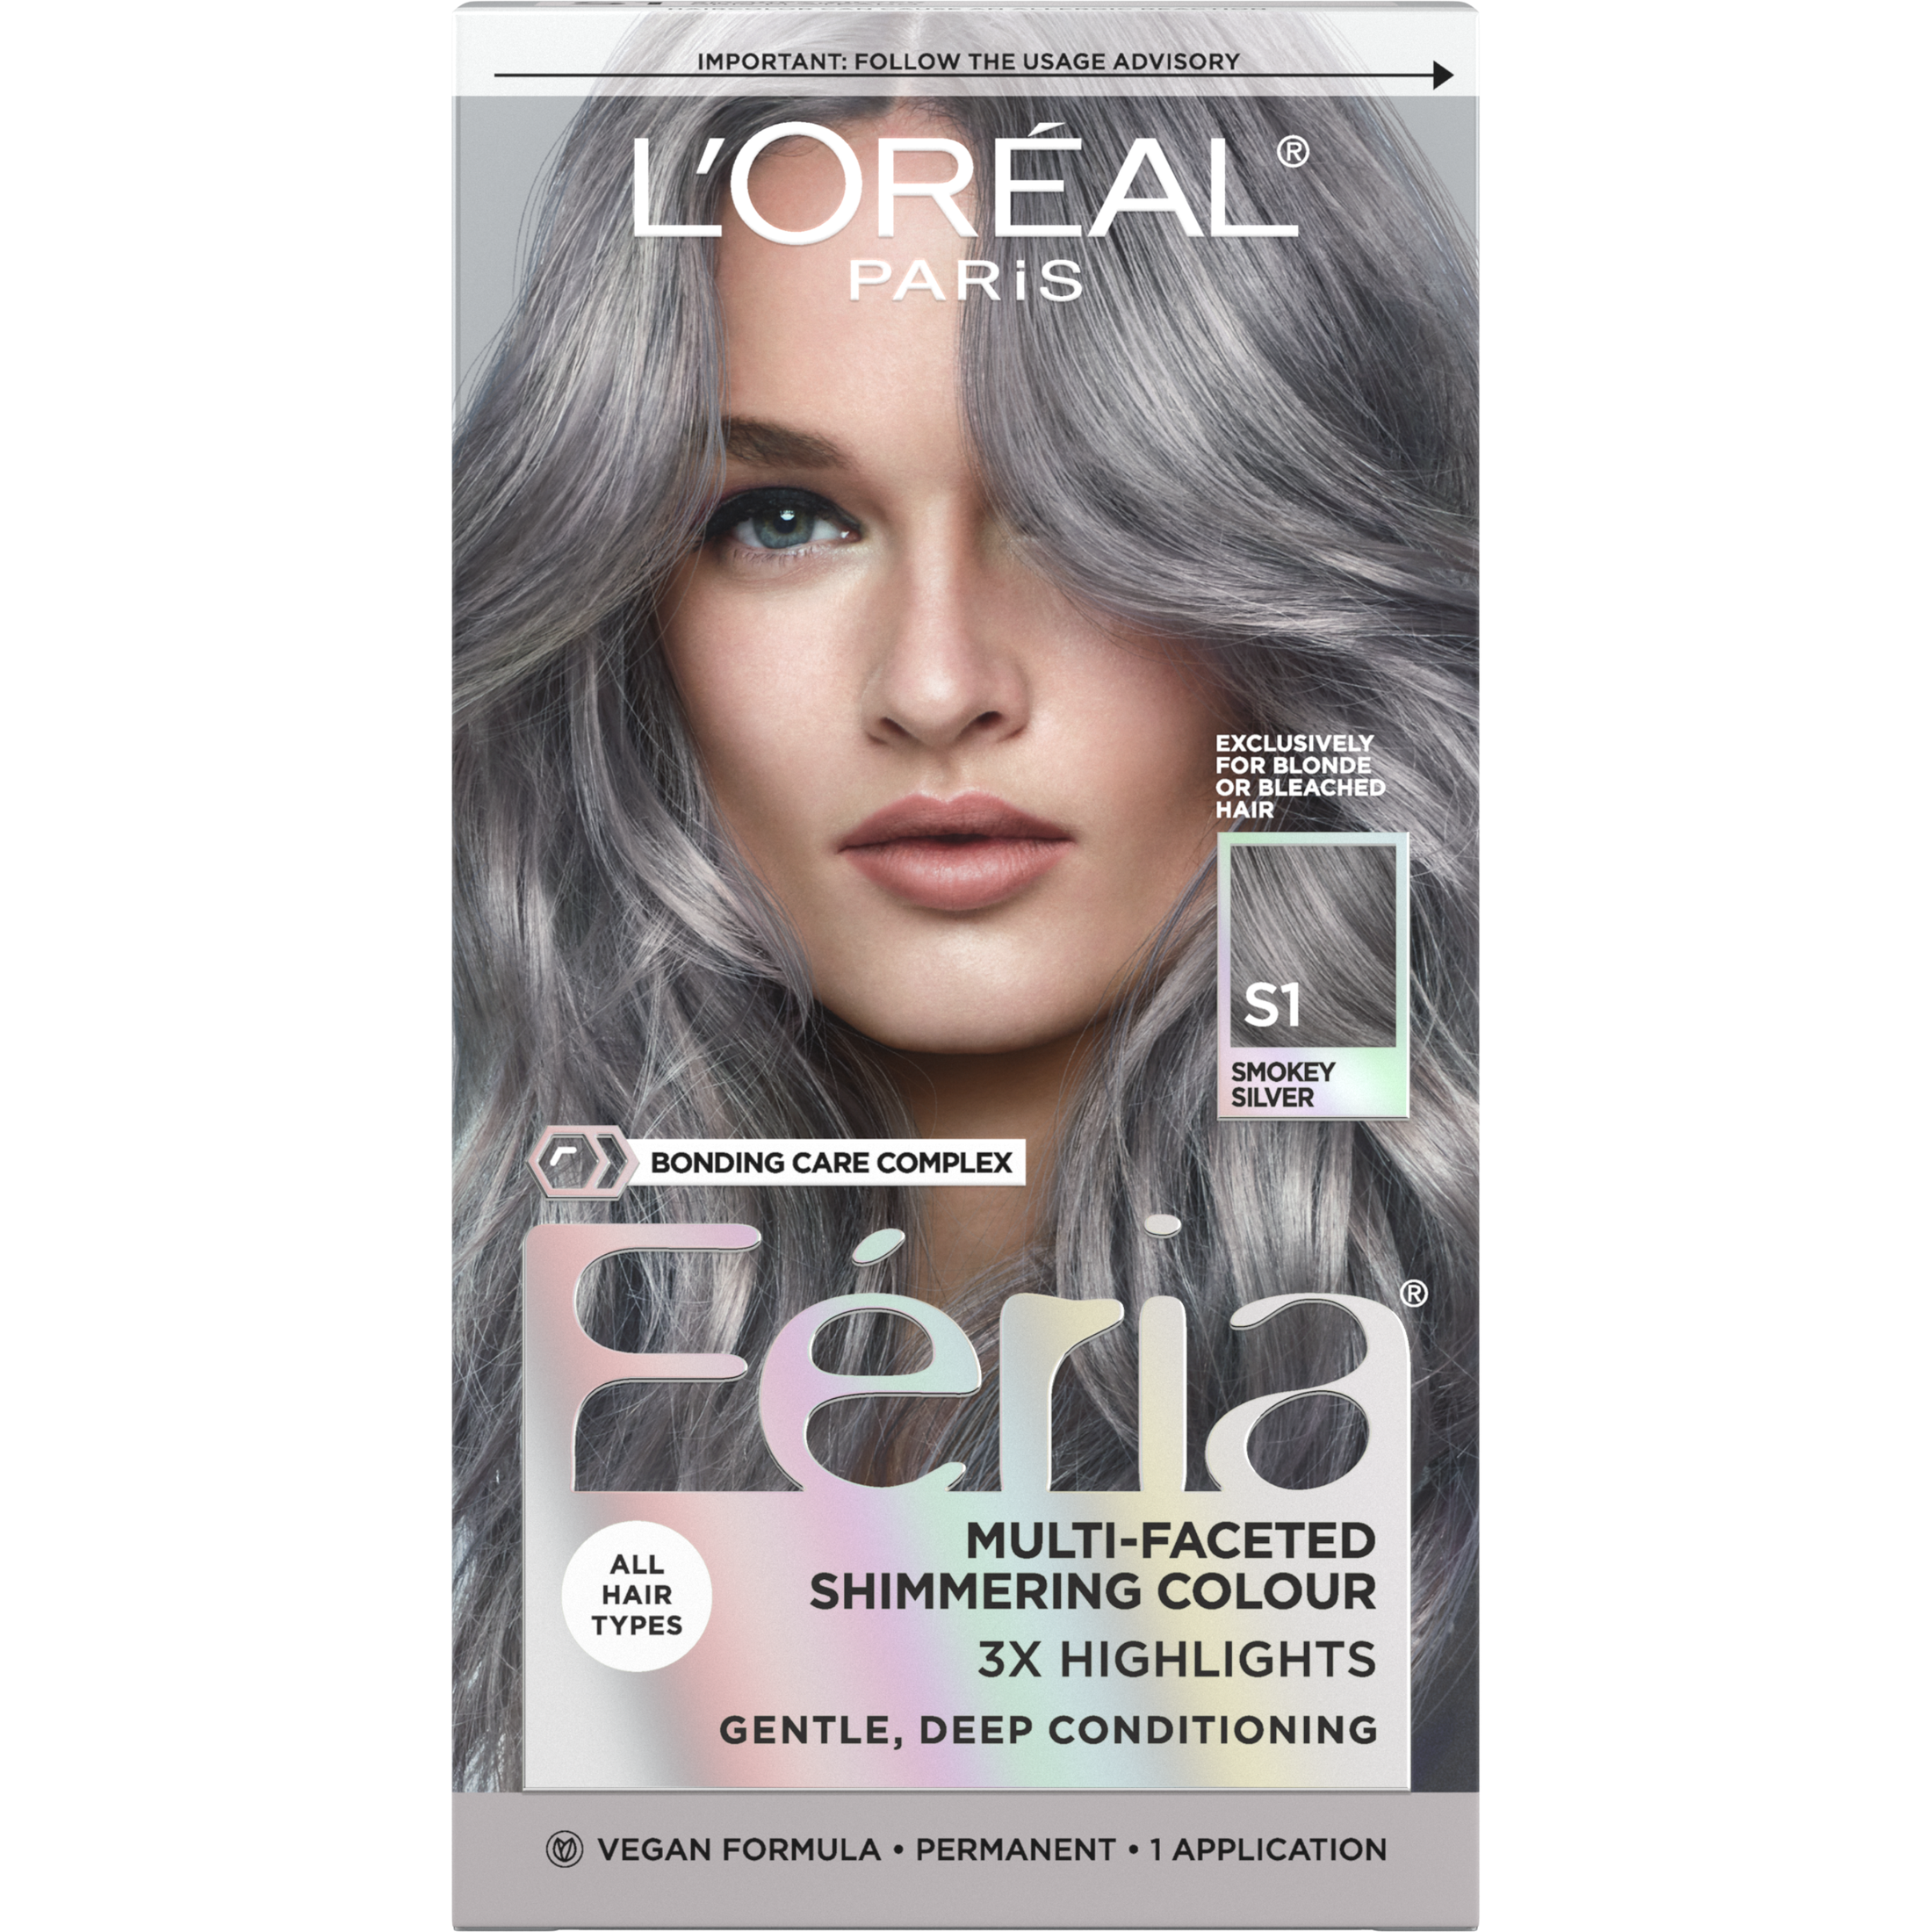 L'Oreal Paris Feria Permanent Hair Color, S1 Smokey Silver - image 1 of 9